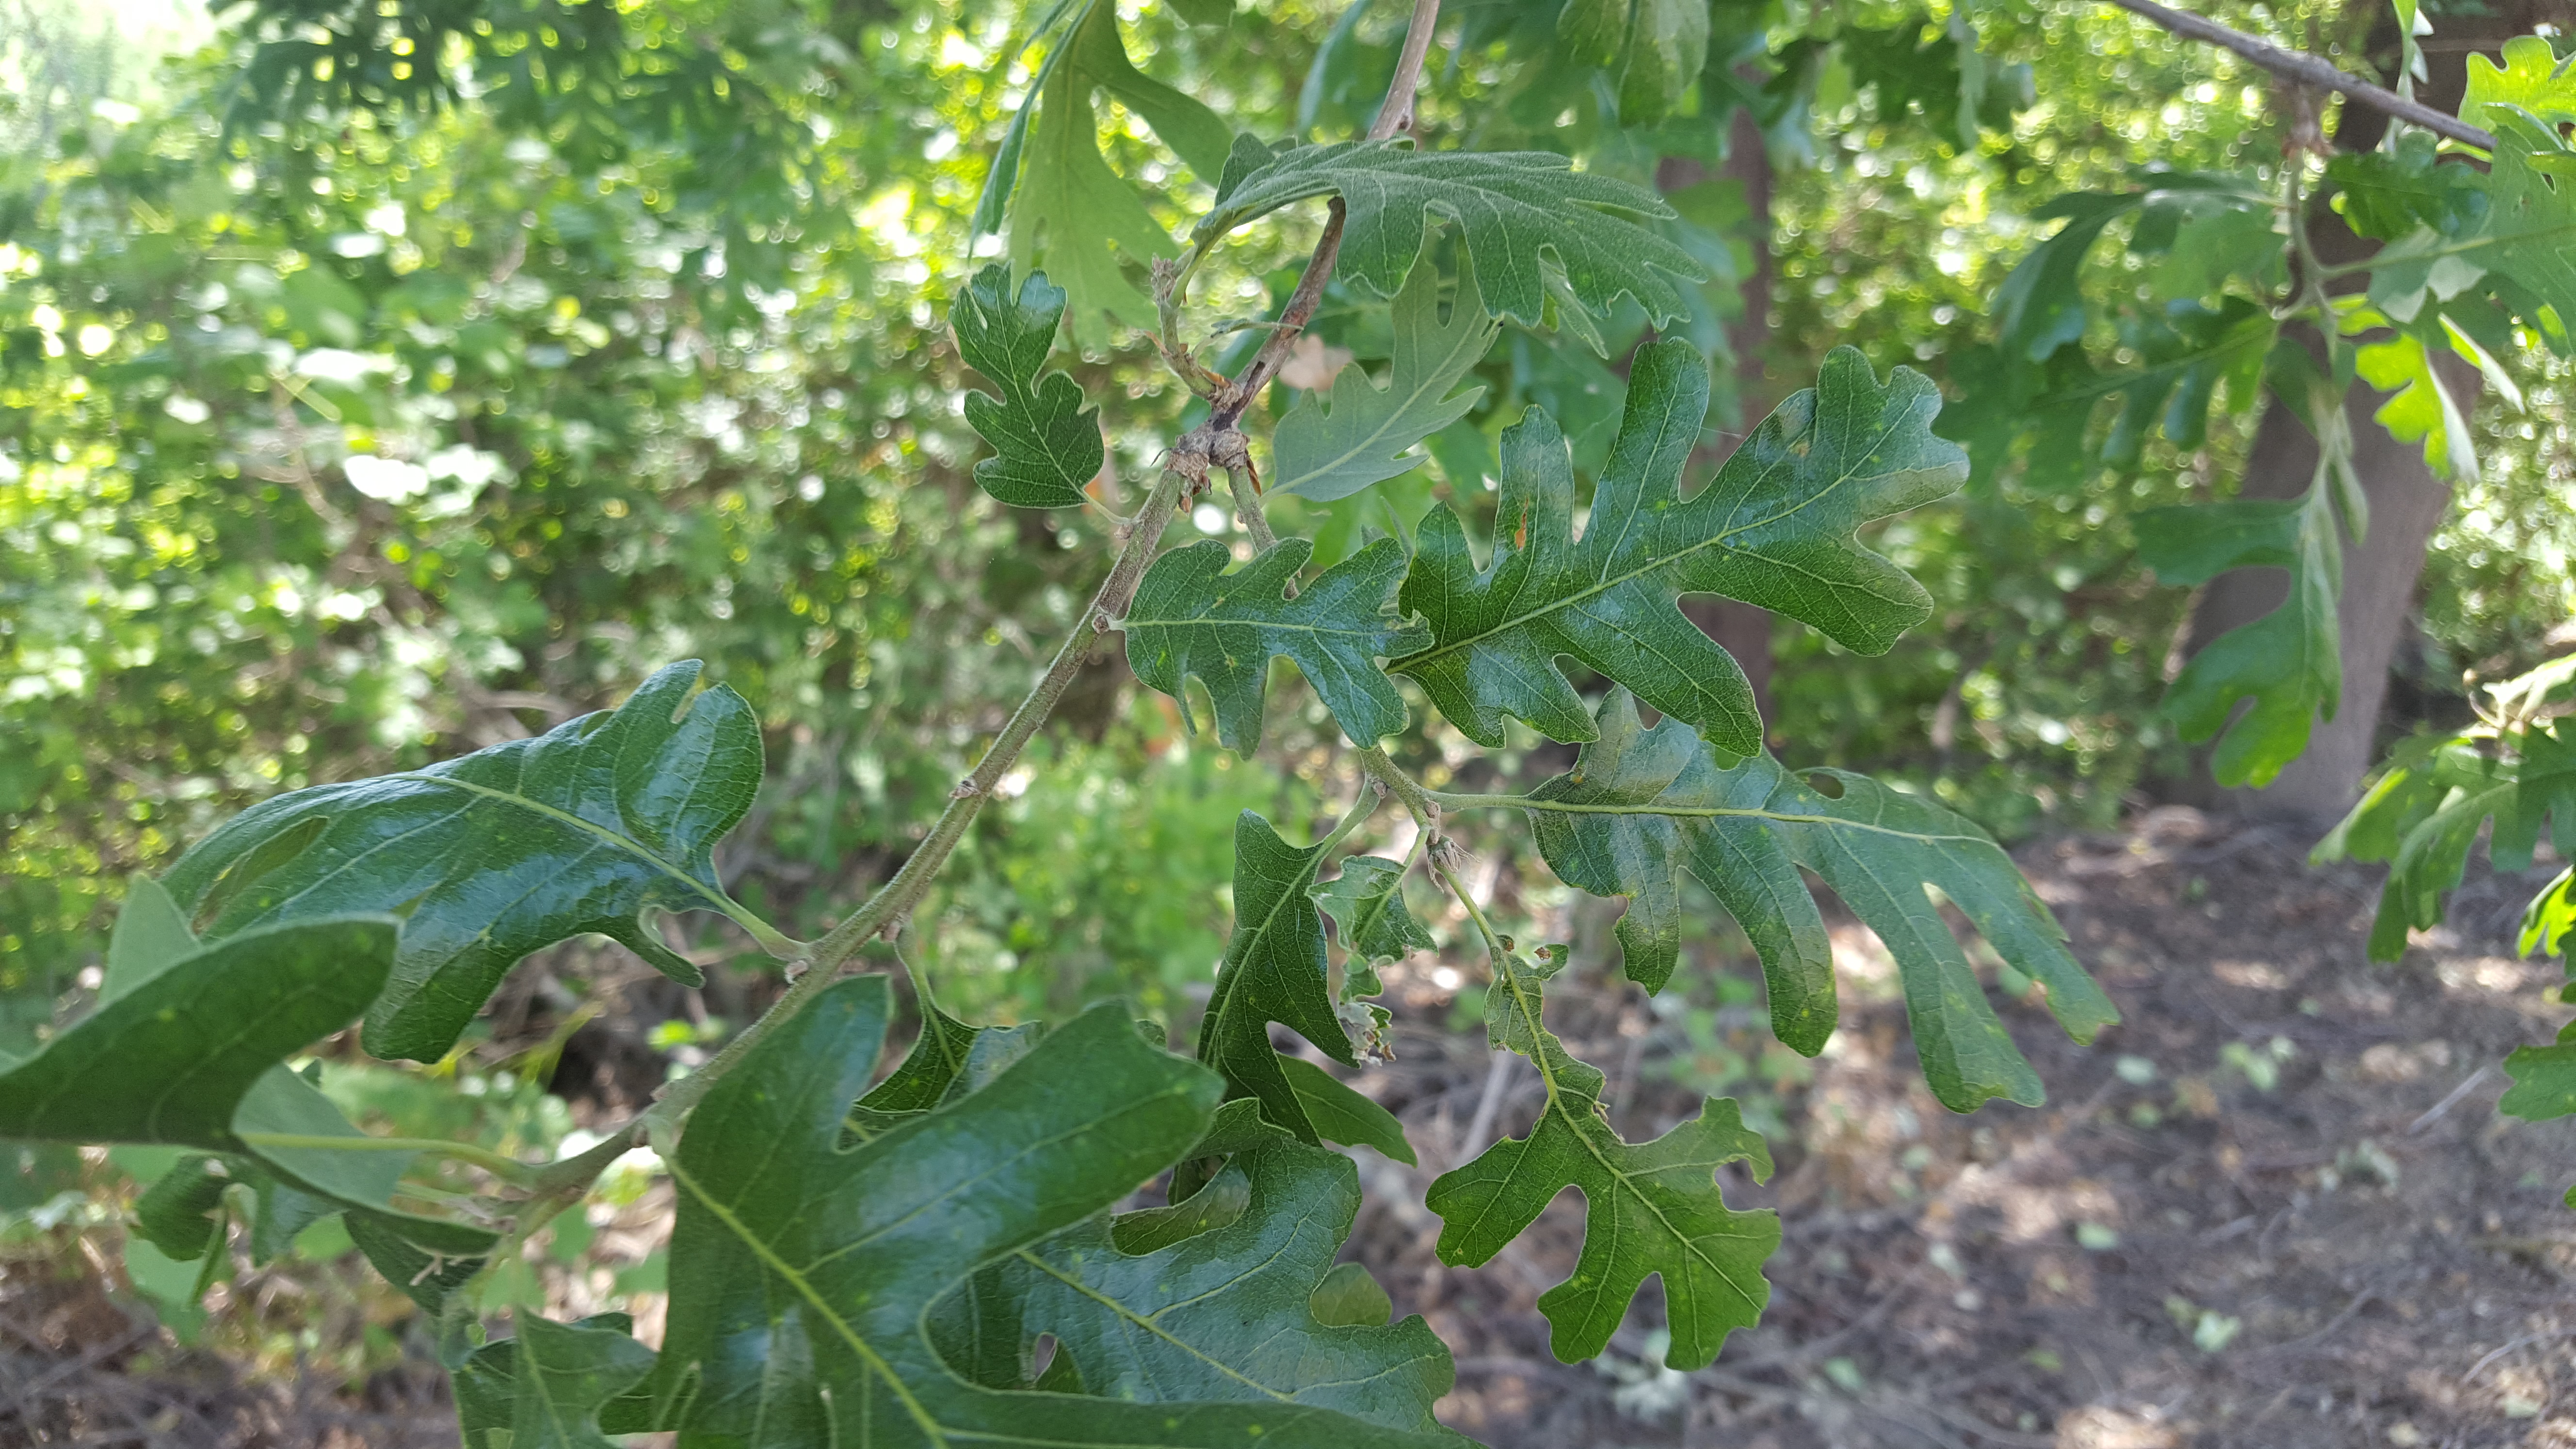 Pinnately lobate oak leaves resemble a feather